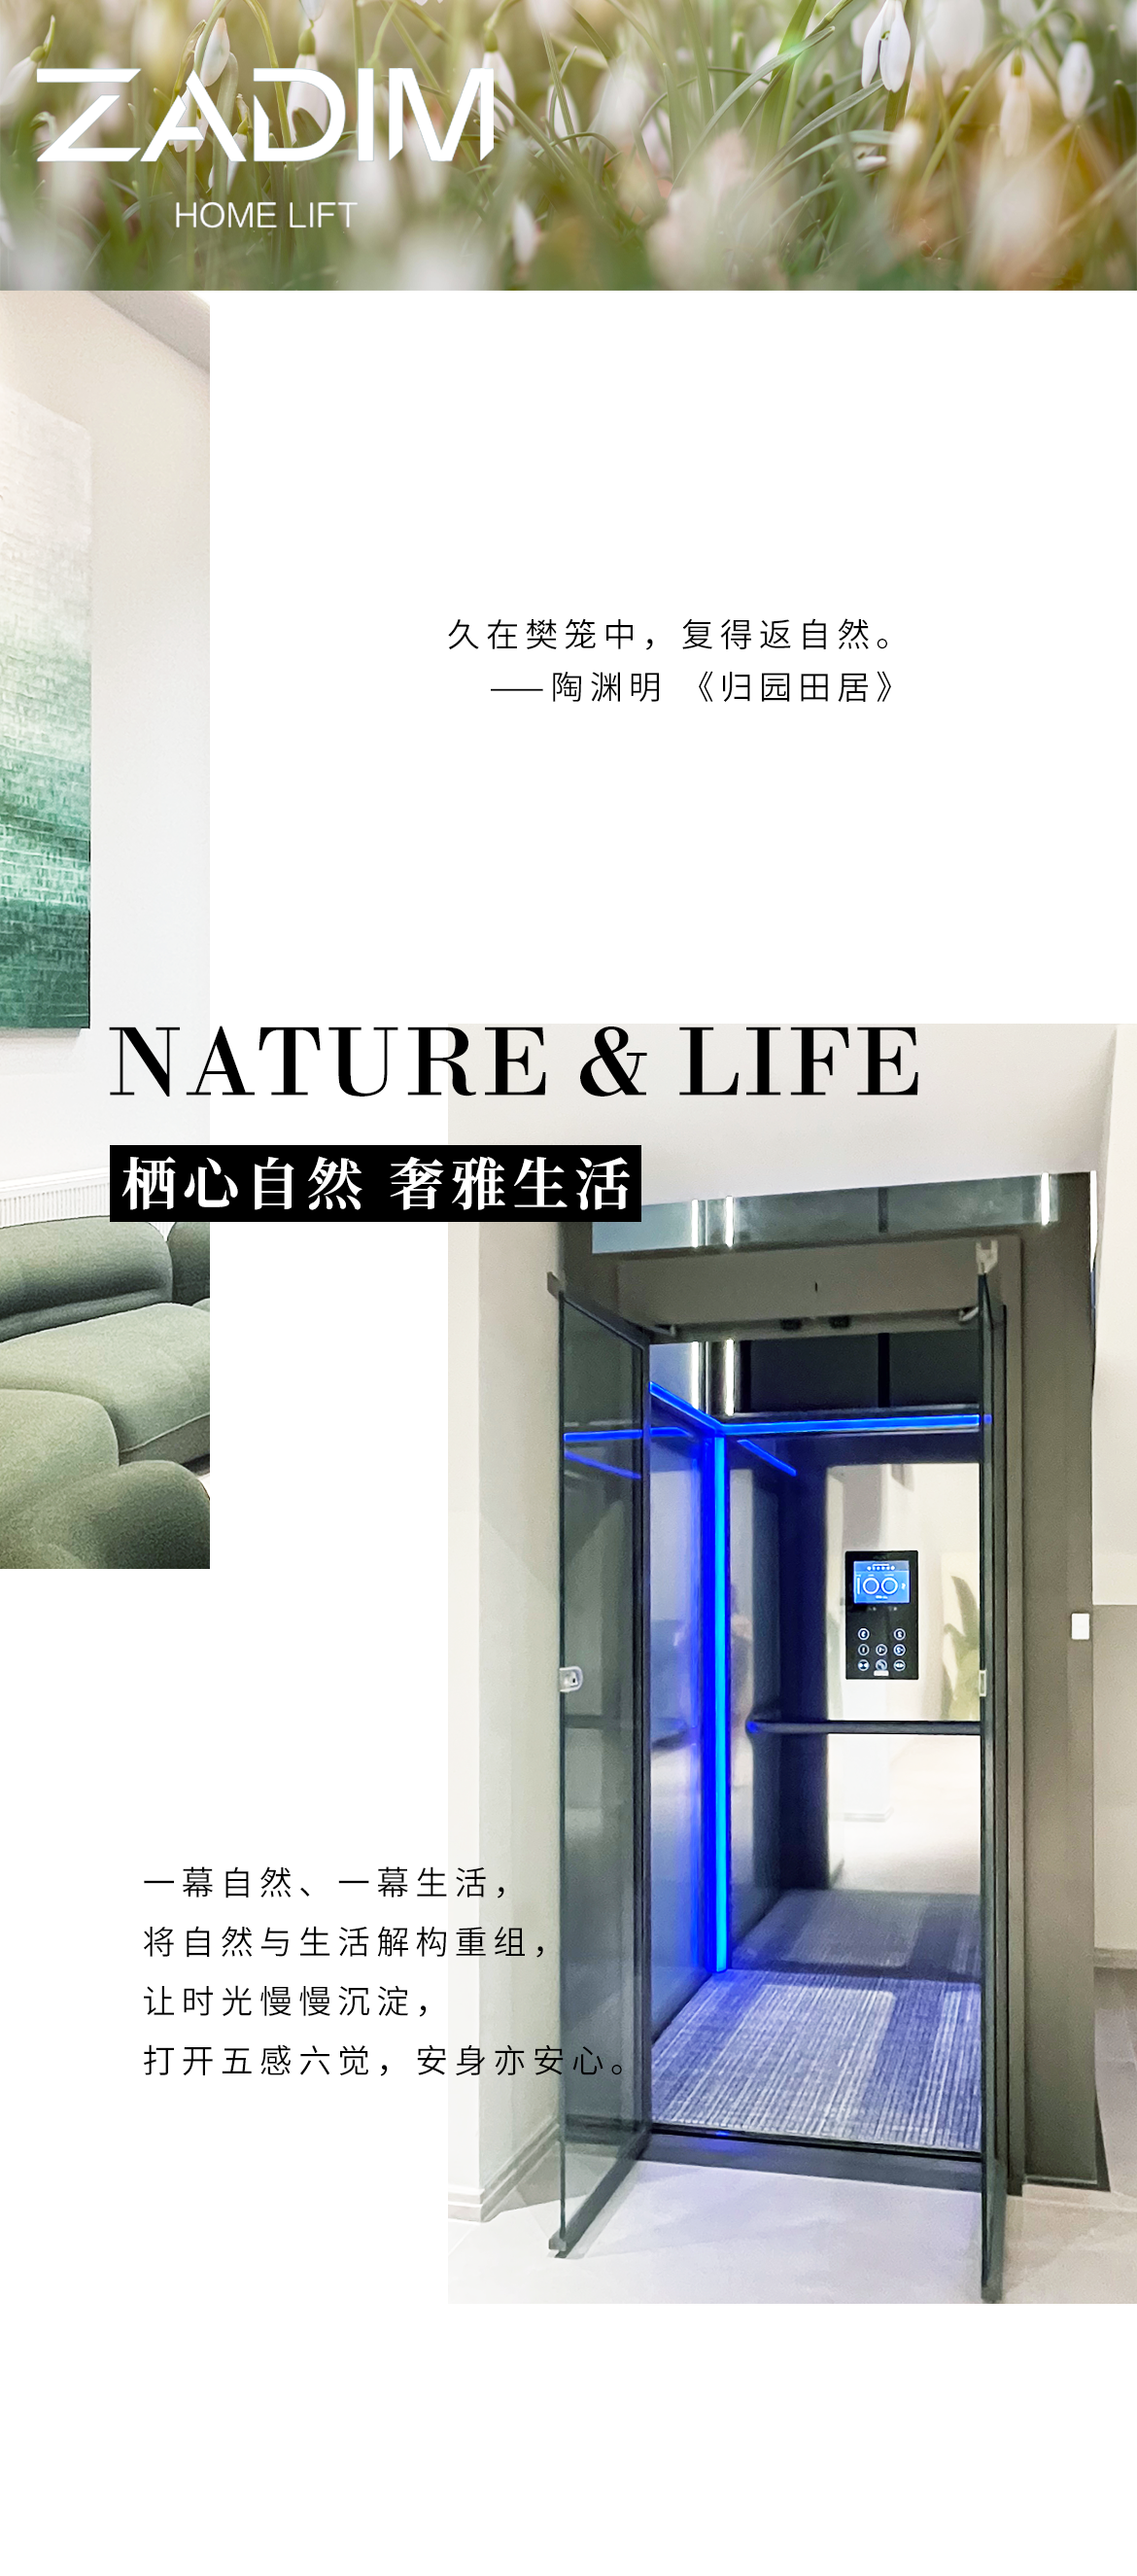 ZADIM瑞典希贝姆家用电梯丨细节入微，栖心自然，诠释奢雅之道！